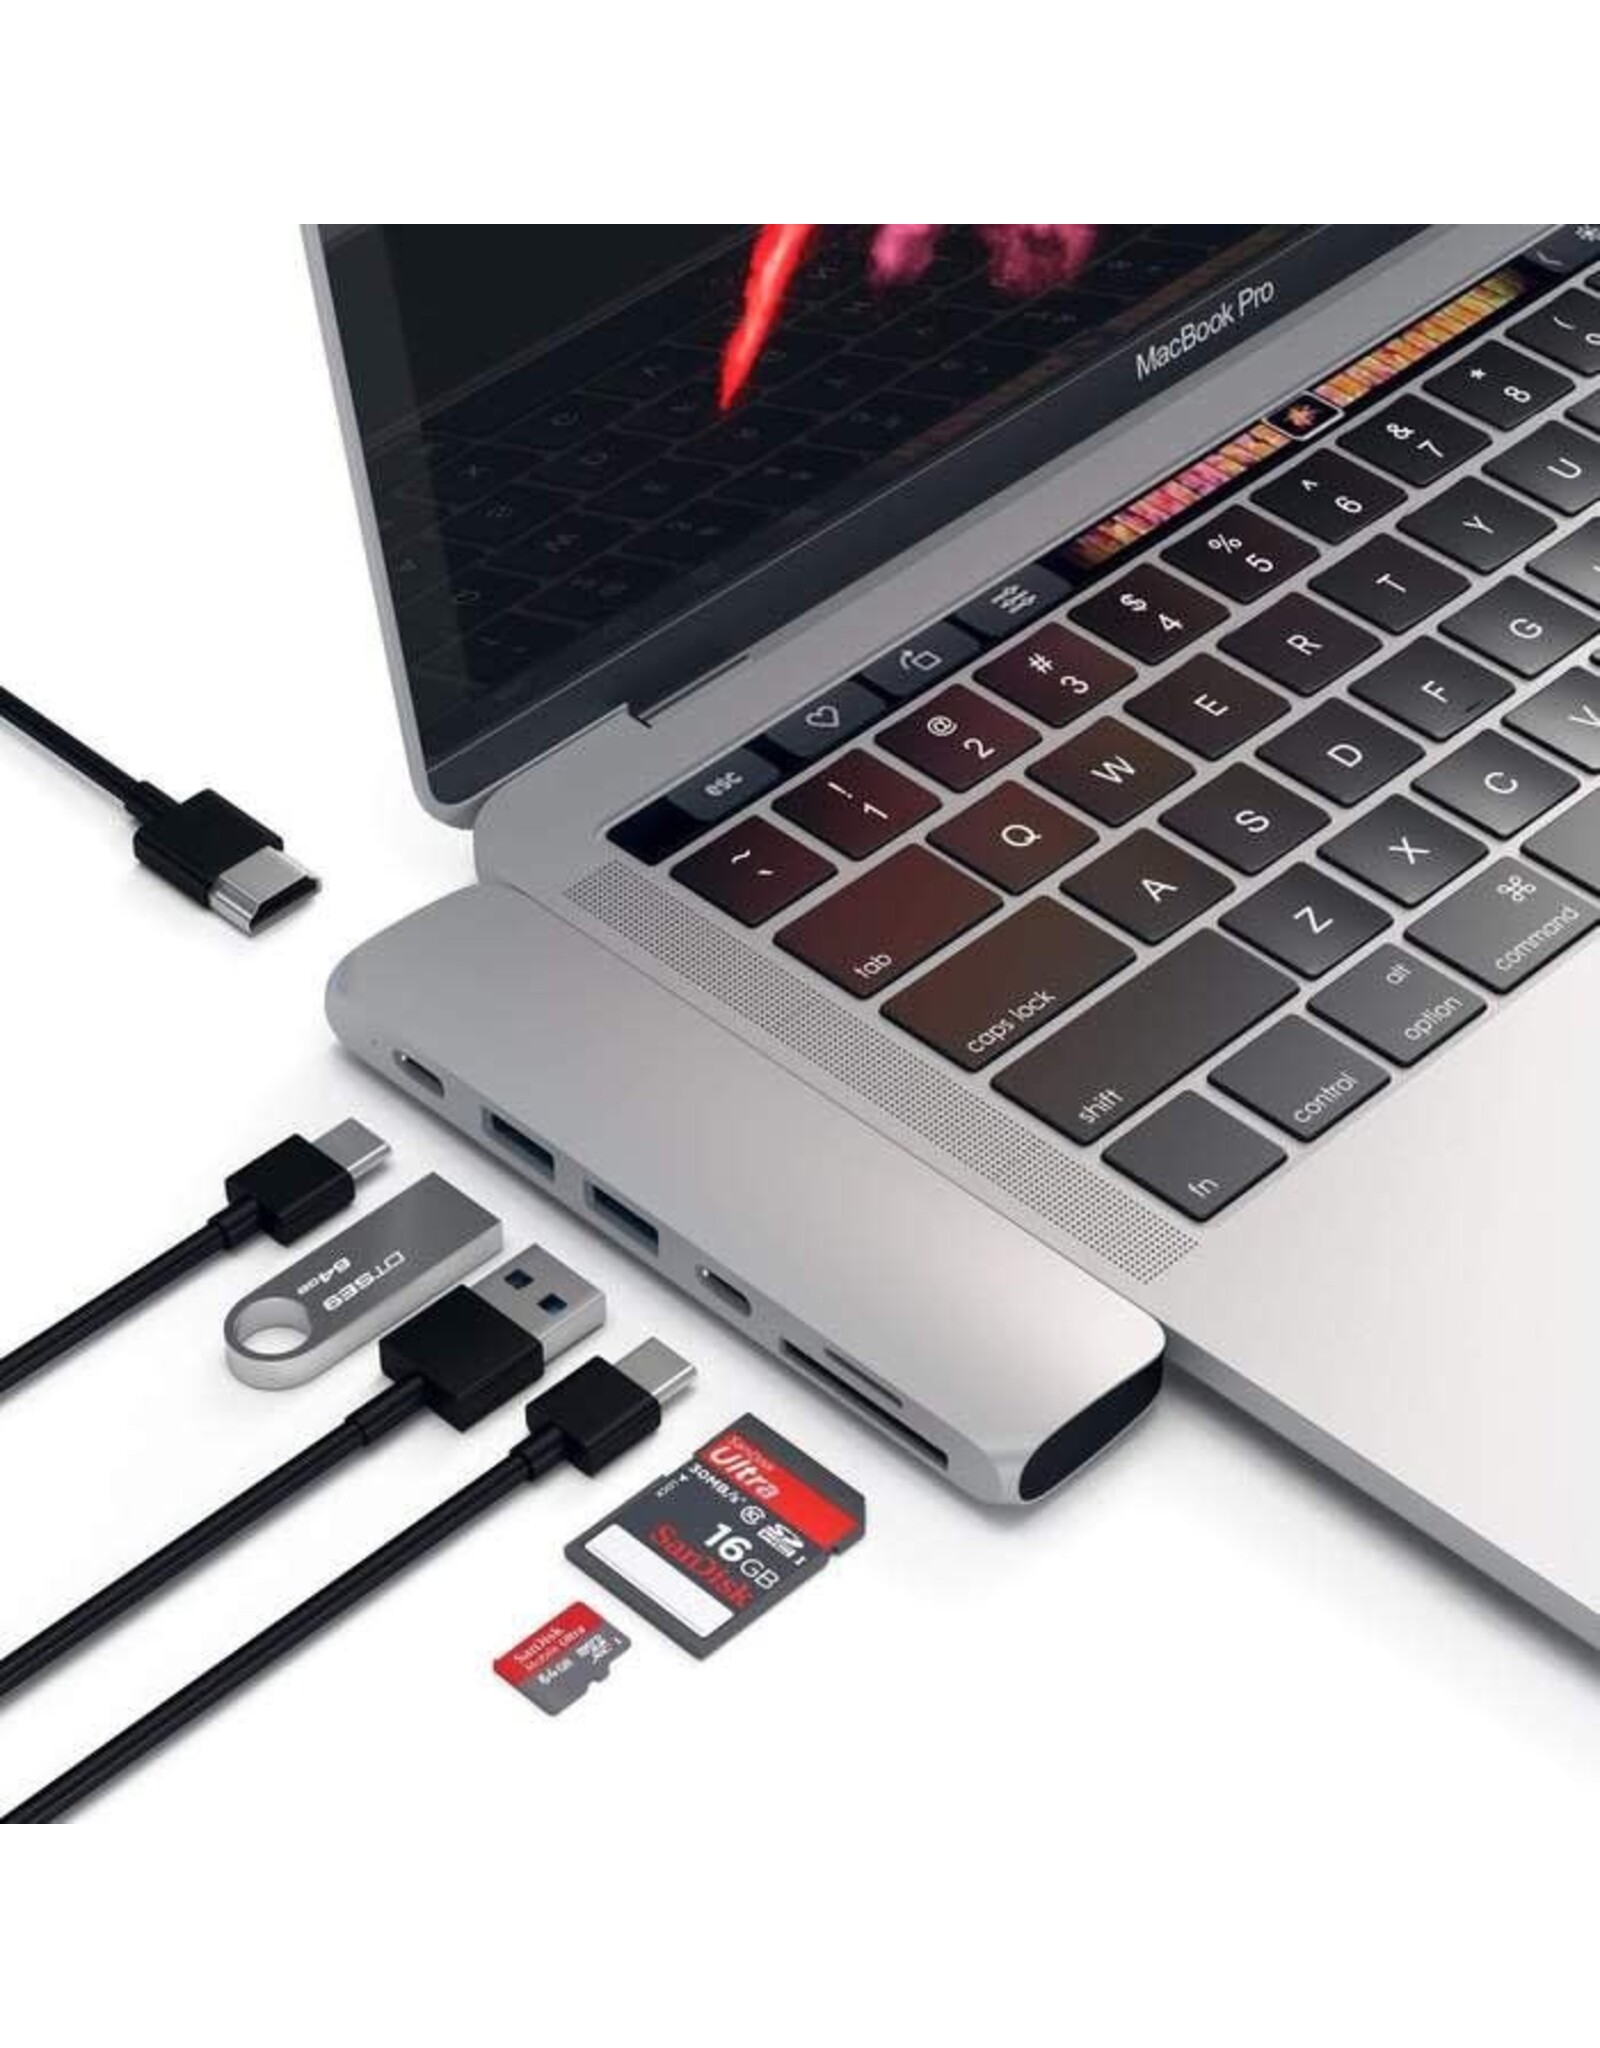 Satechi Satechi Type-C Pro Hub adapter / Thunderbolt 3 port, USB-C port, 2 x USB 3.0 ports, 4k HDMI /  SD/Micro card reader - Silver